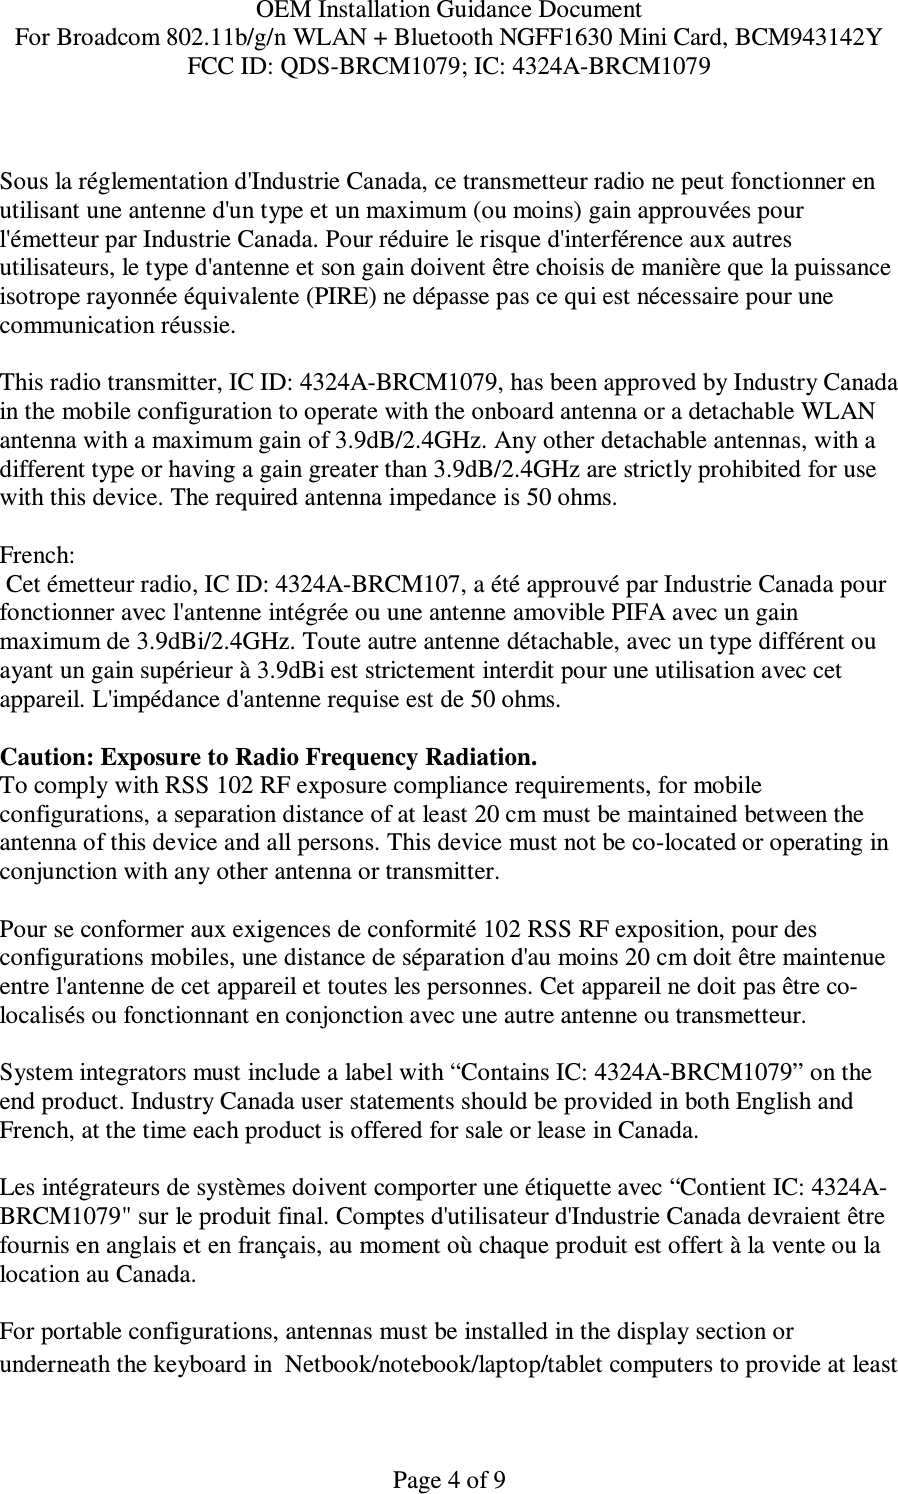 OEM Installation Guidance Document For Broadcom 802.11b/g/n WLAN + Bluetooth NGFF1630 Mini Card, BCM943142Y FCC ID: QDS-BRCM1079; IC: 4324A-BRCM1079   Page 4 of 9  Sous la réglementation d&apos;Industrie Canada, ce transmetteur radio ne peut fonctionner en utilisant une antenne d&apos;un type et un maximum (ou moins) gain approuvées pour l&apos;émetteur par Industrie Canada. Pour réduire le risque d&apos;interférence aux autres utilisateurs, le type d&apos;antenne et son gain doivent être choisis de manière que la puissance isotrope rayonnée équivalente (PIRE) ne dépasse pas ce qui est nécessaire pour une communication réussie.  This radio transmitter, IC ID: 4324A-BRCM1079, has been approved by Industry Canada in the mobile configuration to operate with the onboard antenna or a detachable WLAN  antenna with a maximum gain of 3.9dB/2.4GHz. Any other detachable antennas, with a different type or having a gain greater than 3.9dB/2.4GHz are strictly prohibited for use with this device. The required antenna impedance is 50 ohms.  French:   Cet émetteur radio, IC ID: 4324A-BRCM107, a été approuvé par Industrie Canada pour fonctionner avec l&apos;antenne intégrée ou une antenne amovible PIFA avec un gain maximum de 3.9dBi/2.4GHz. Toute autre antenne détachable, avec un type différent ou ayant un gain supérieur à 3.9dBi est strictement interdit pour une utilisation avec cet appareil. L&apos;impédance d&apos;antenne requise est de 50 ohms.  Caution: Exposure to Radio Frequency Radiation. To comply with RSS 102 RF exposure compliance requirements, for mobile configurations, a separation distance of at least 20 cm must be maintained between the antenna of this device and all persons. This device must not be co-located or operating in conjunction with any other antenna or transmitter.  Pour se conformer aux exigences de conformité 102 RSS RF exposition, pour des configurations mobiles, une distance de séparation d&apos;au moins 20 cm doit être maintenue entre l&apos;antenne de cet appareil et toutes les personnes. Cet appareil ne doit pas être co-localisés ou fonctionnant en conjonction avec une autre antenne ou transmetteur.  System integrators must include a label with “Contains IC: 4324A-BRCM1079” on the end product. Industry Canada user statements should be provided in both English and French, at the time each product is offered for sale or lease in Canada.  Les intégrateurs de systèmes doivent comporter une étiquette avec “Contient IC: 4324A-BRCM1079&quot; sur le produit final. Comptes d&apos;utilisateur d&apos;Industrie Canada devraient être fournis en anglais et en français, au moment où chaque produit est offert à la vente ou la location au Canada.  For portable configurations, antennas must be installed in the display section or underneath the keyboard in  Netbook/notebook/laptop/tablet computers to provide at least 